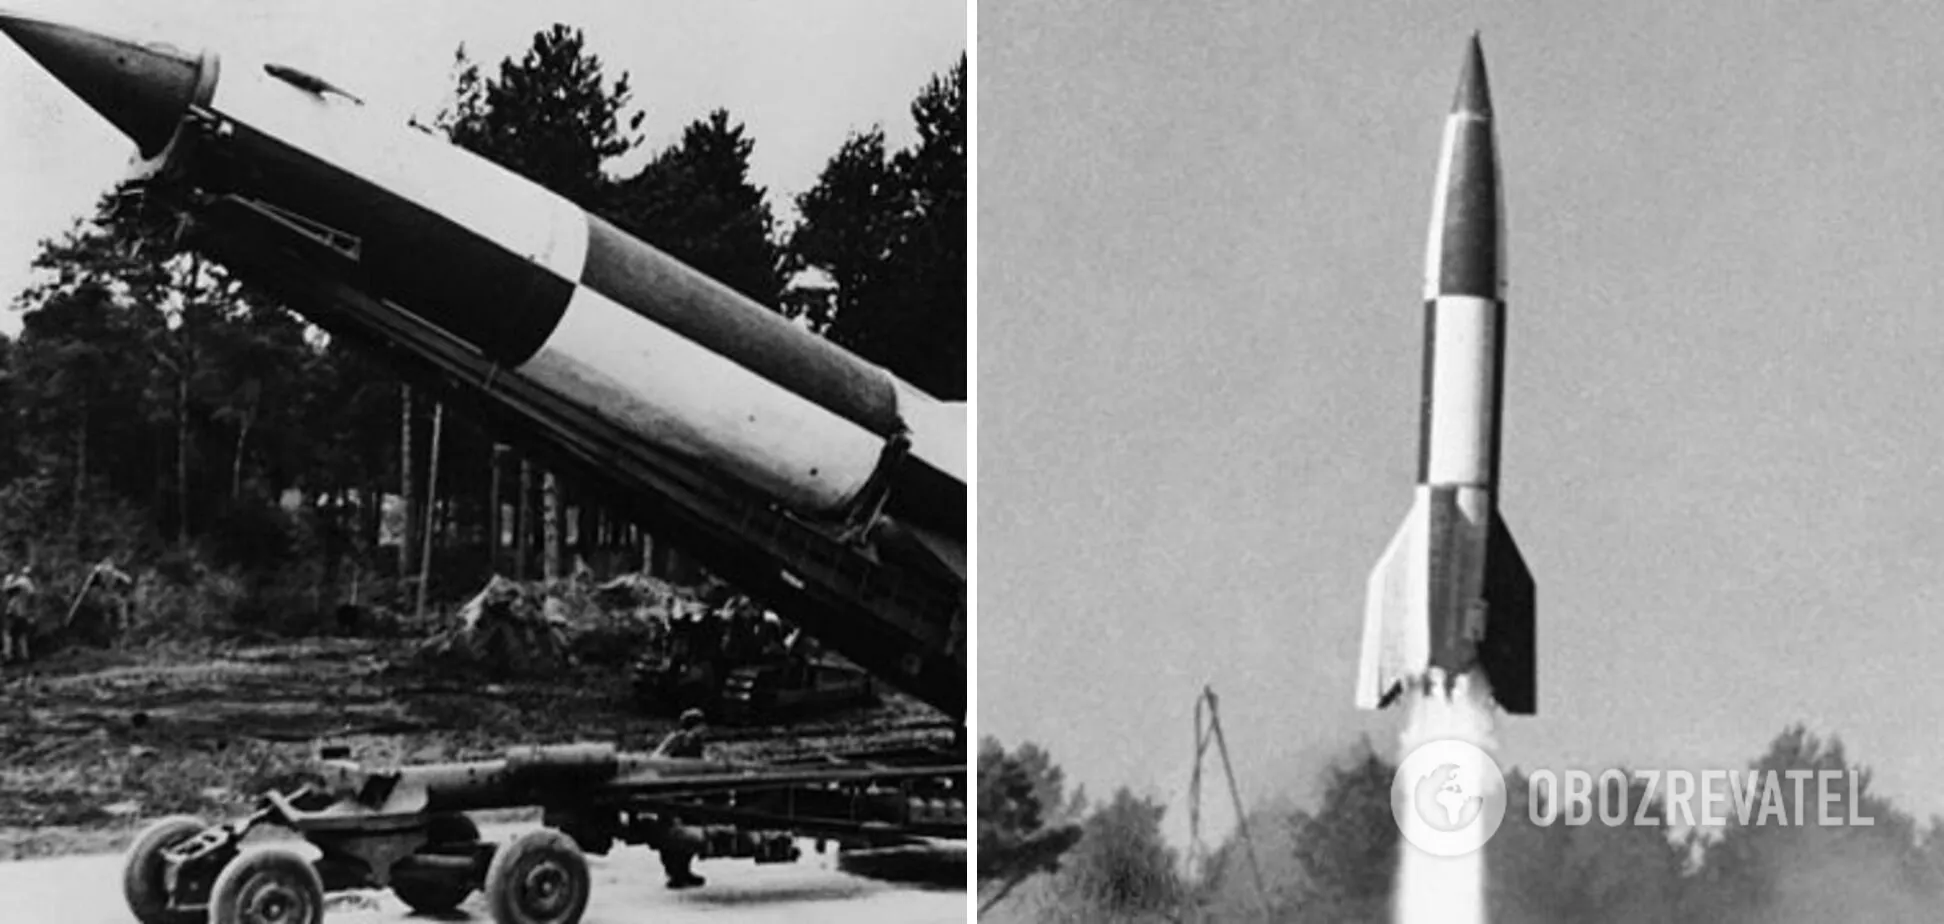 Зліва німецька ракета фау-2 у 1944 році, справа радянська ракета Р1 у 1948 році.